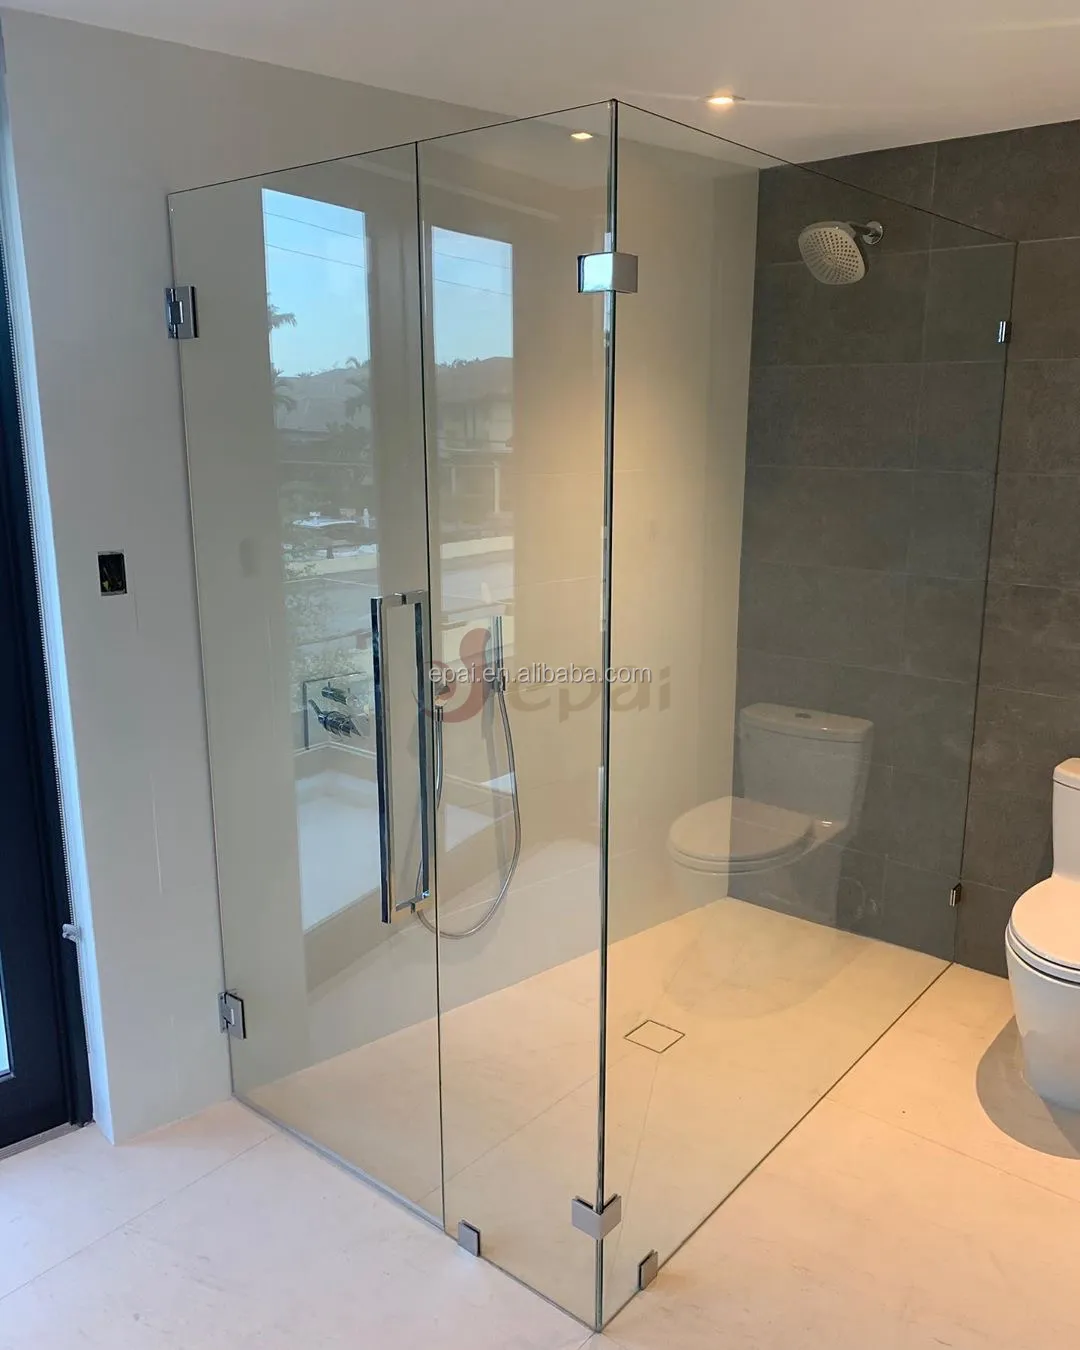 Epai Project soluation for Prefab Modular Stainless Steel bathroom glass door design